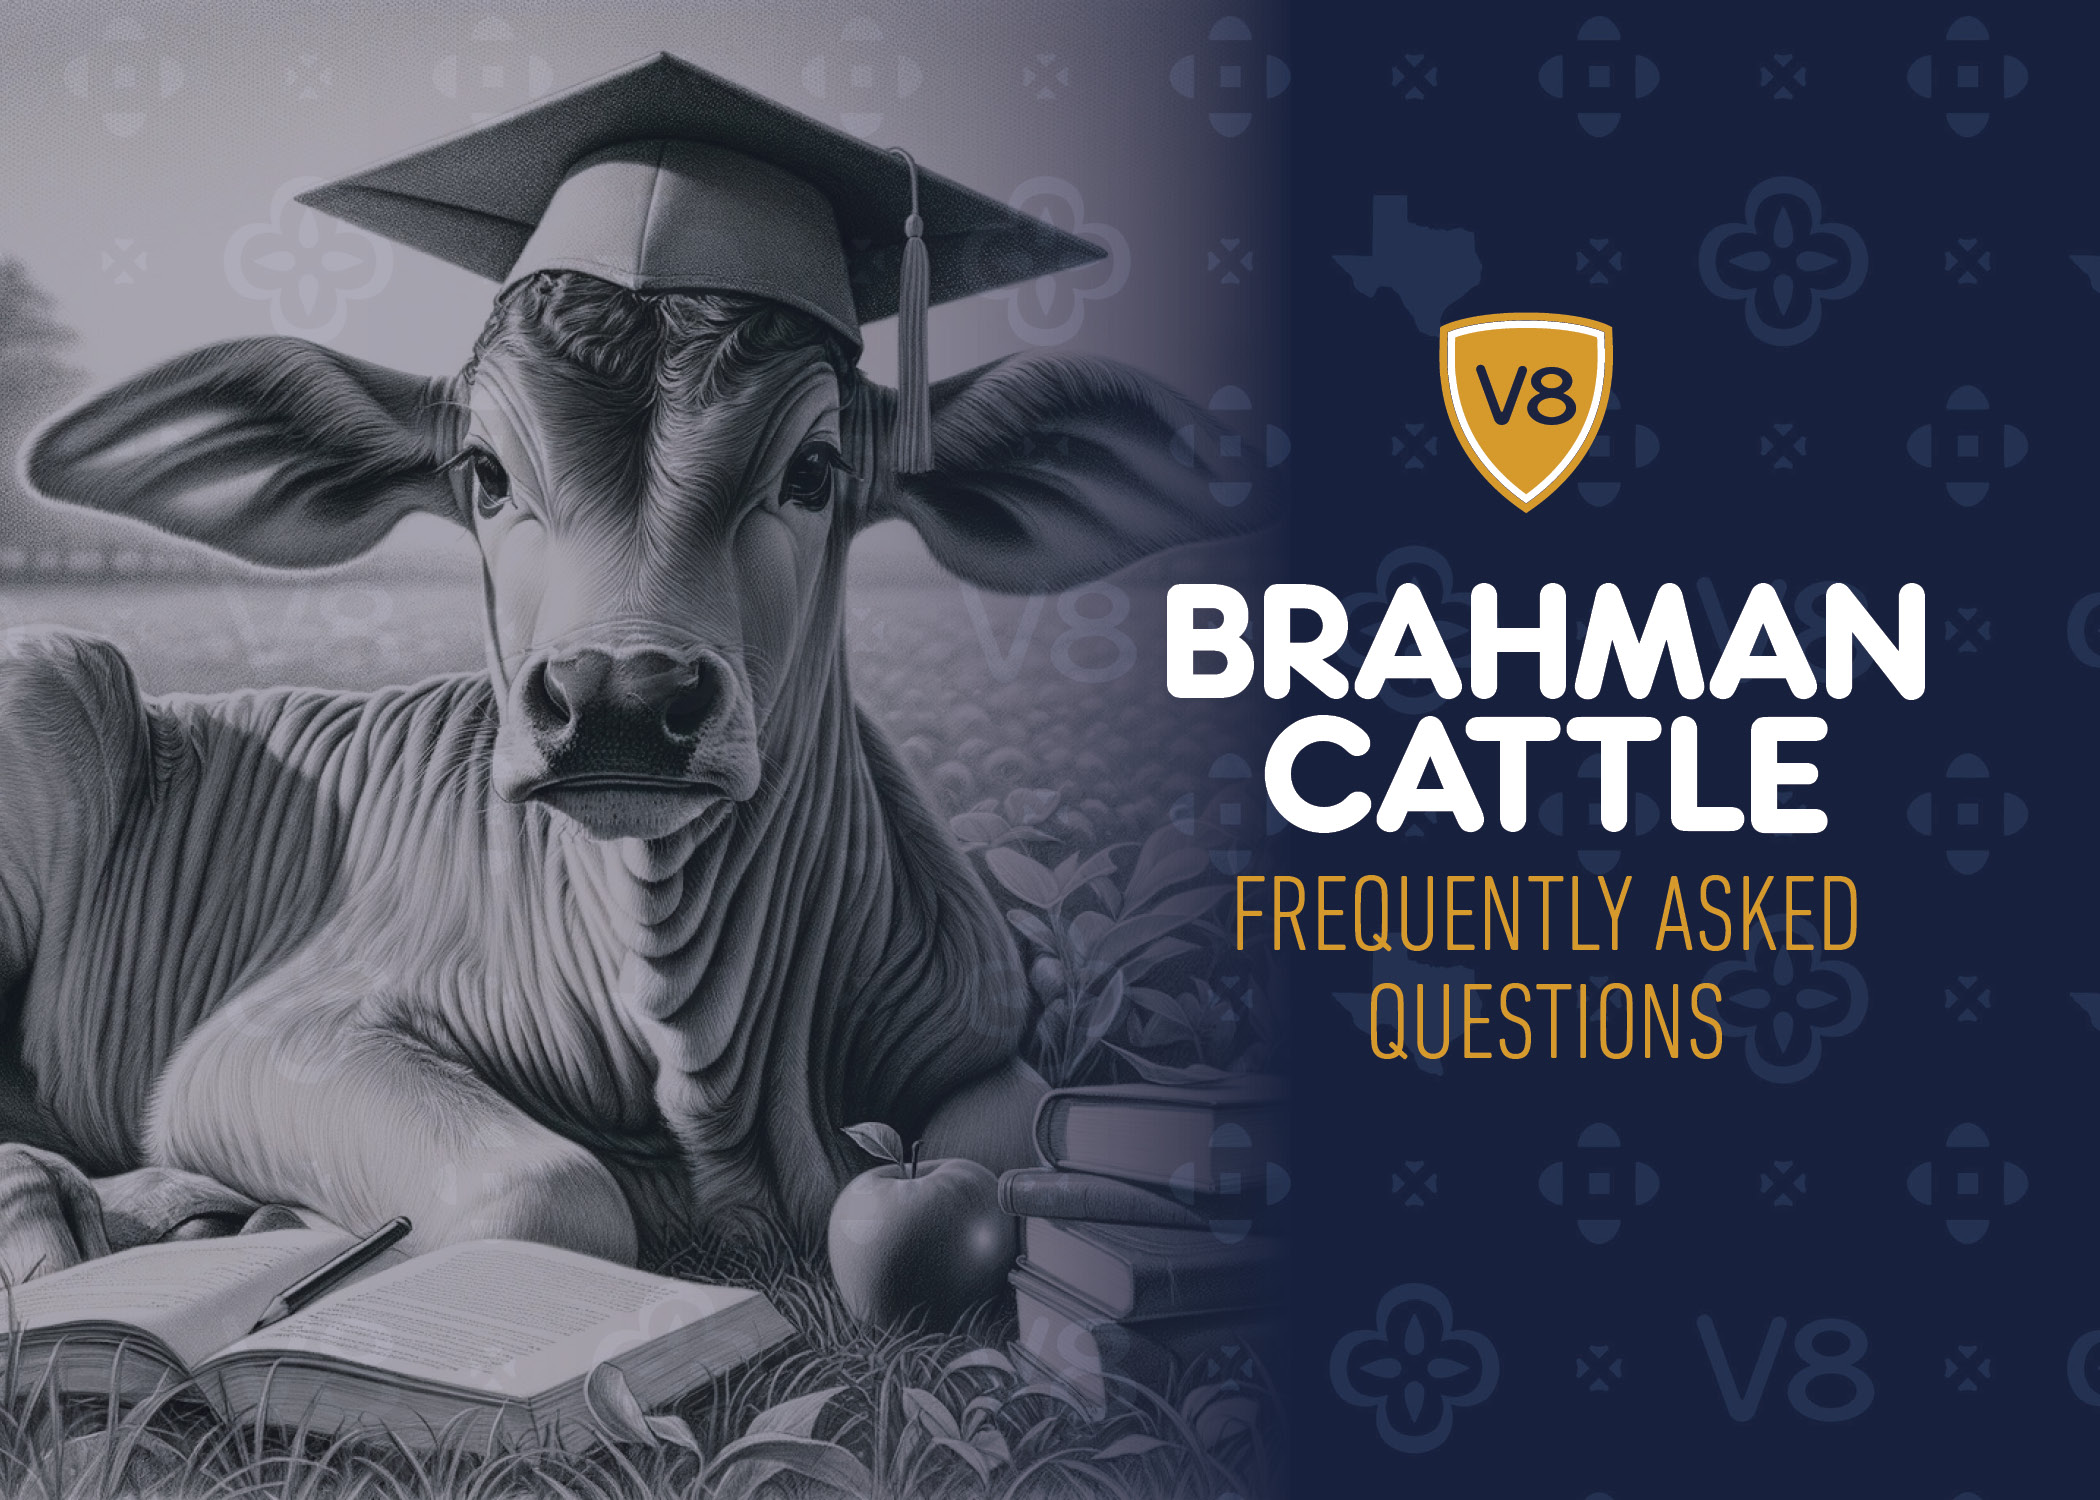 Brahman Bull with Brahman Cow